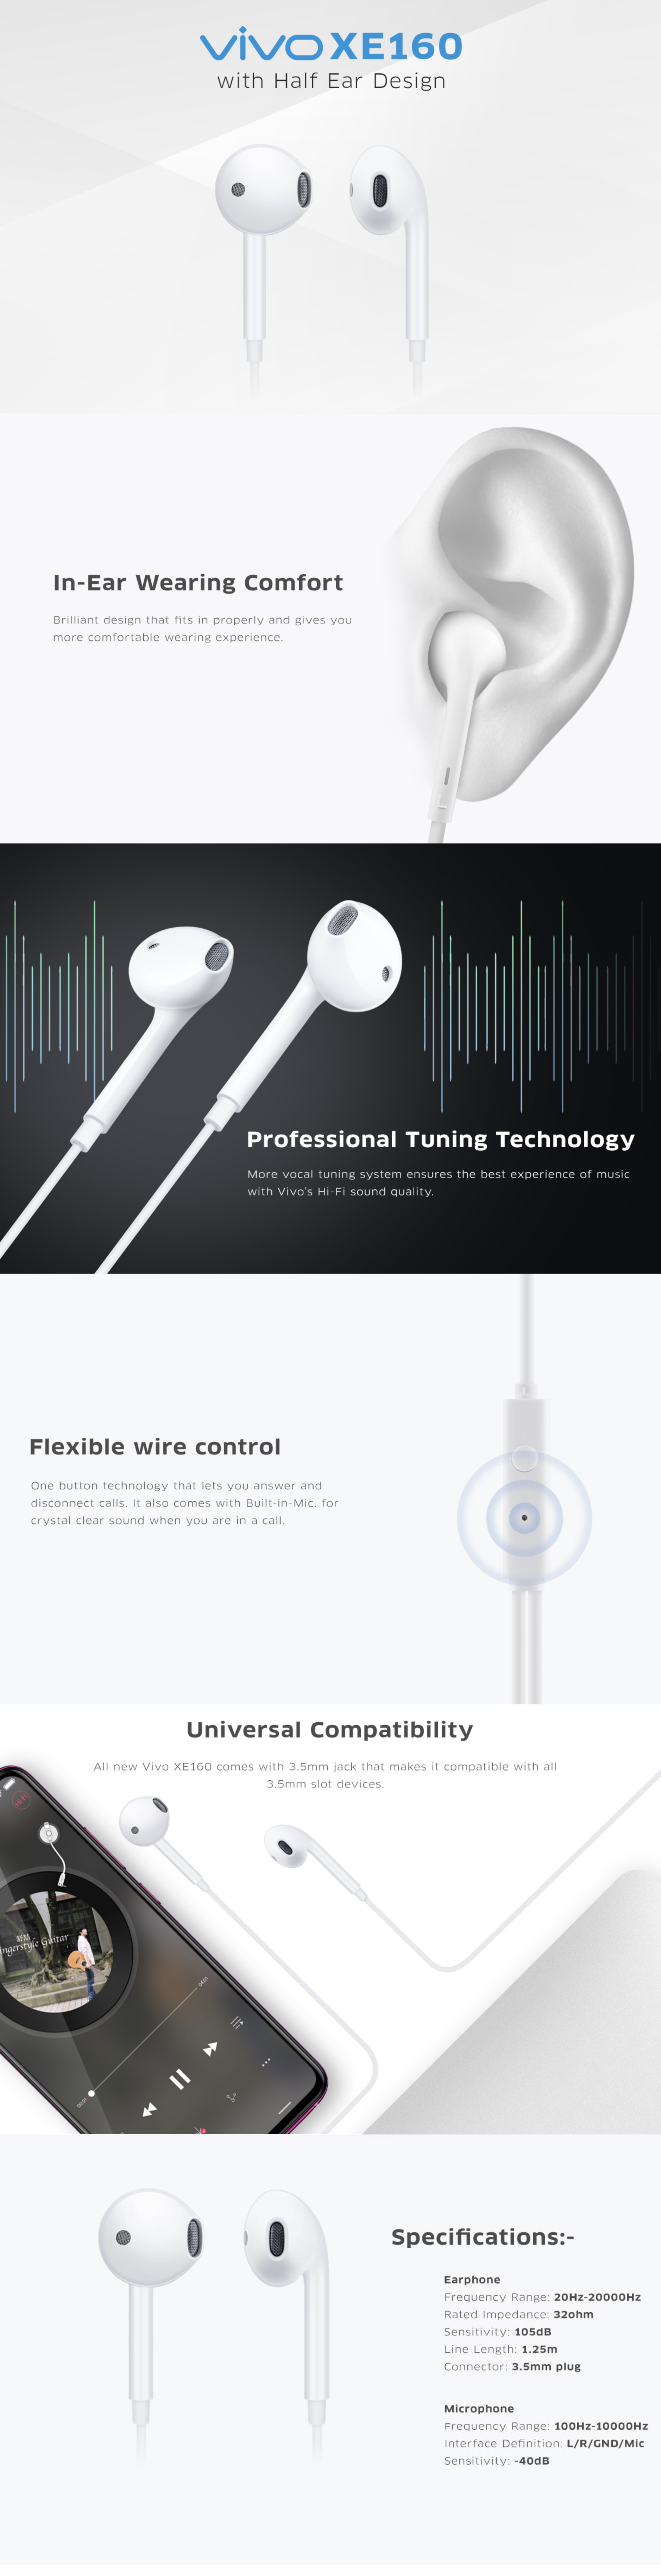 Vivo-XE160-Original-Earphones-Wired-Headset-Earplugs-With-Microphones-White-Description-2